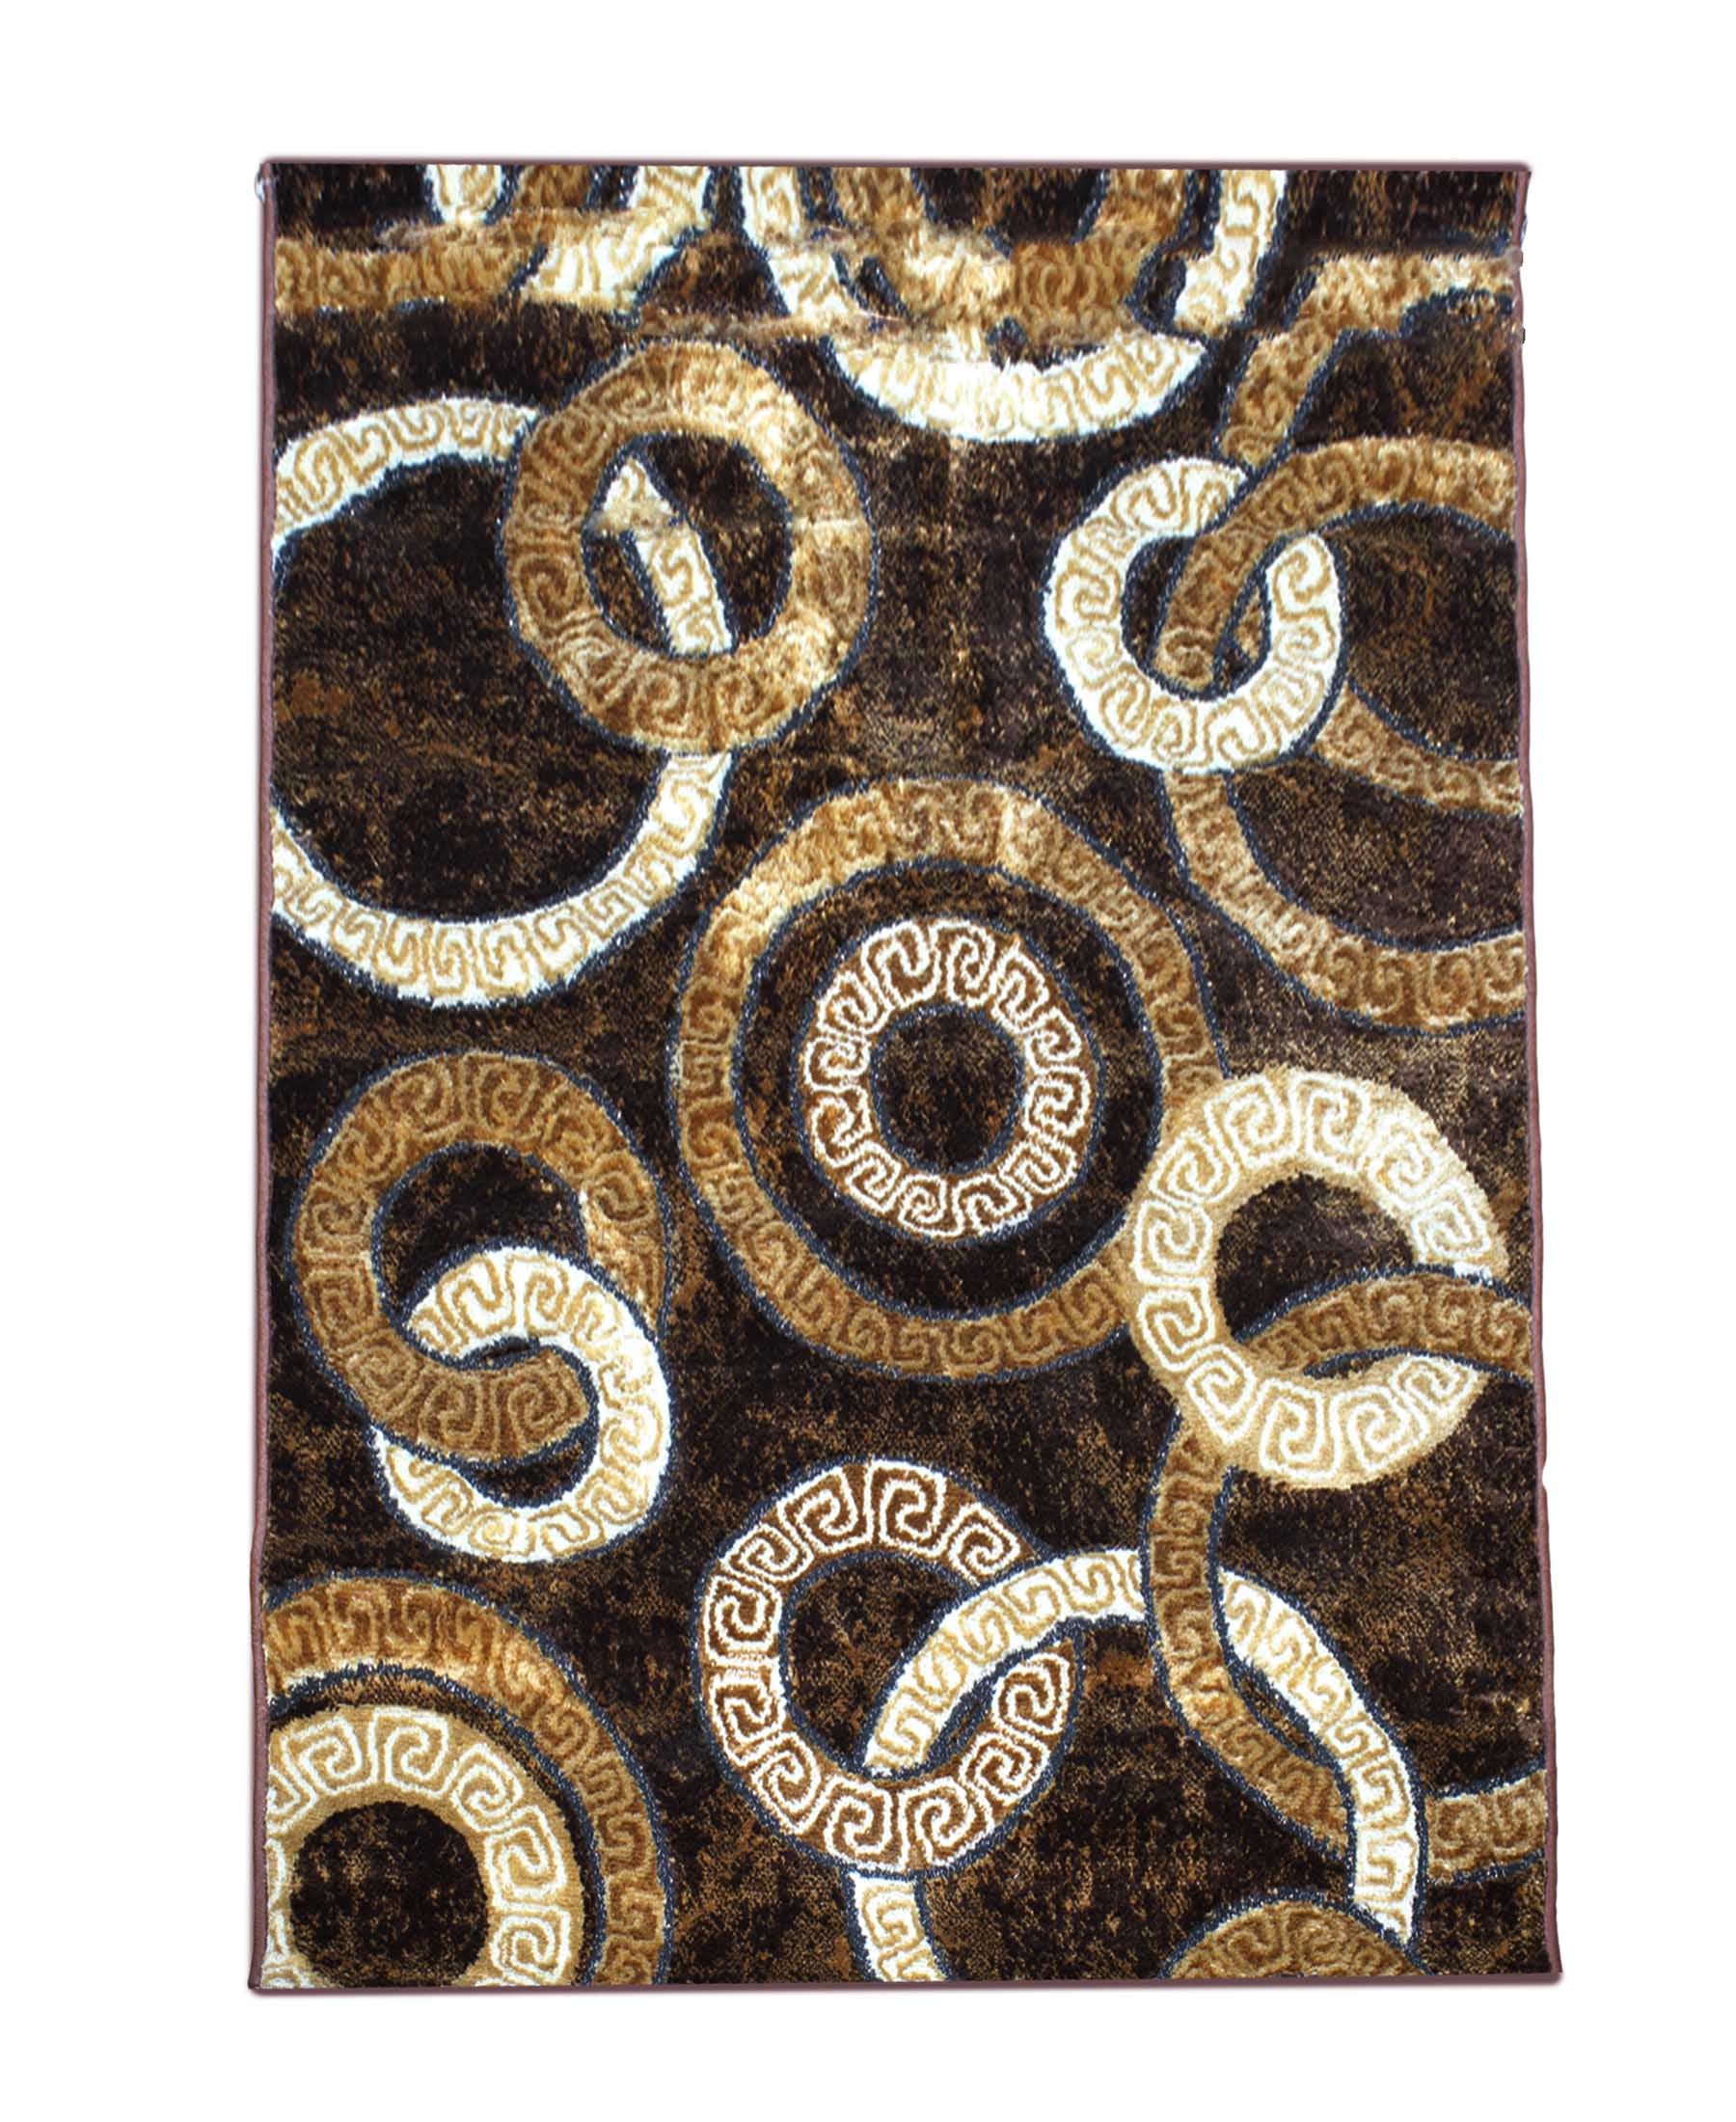 Izmir Linked Carpet 1500mm X 2000mm - Chocolate